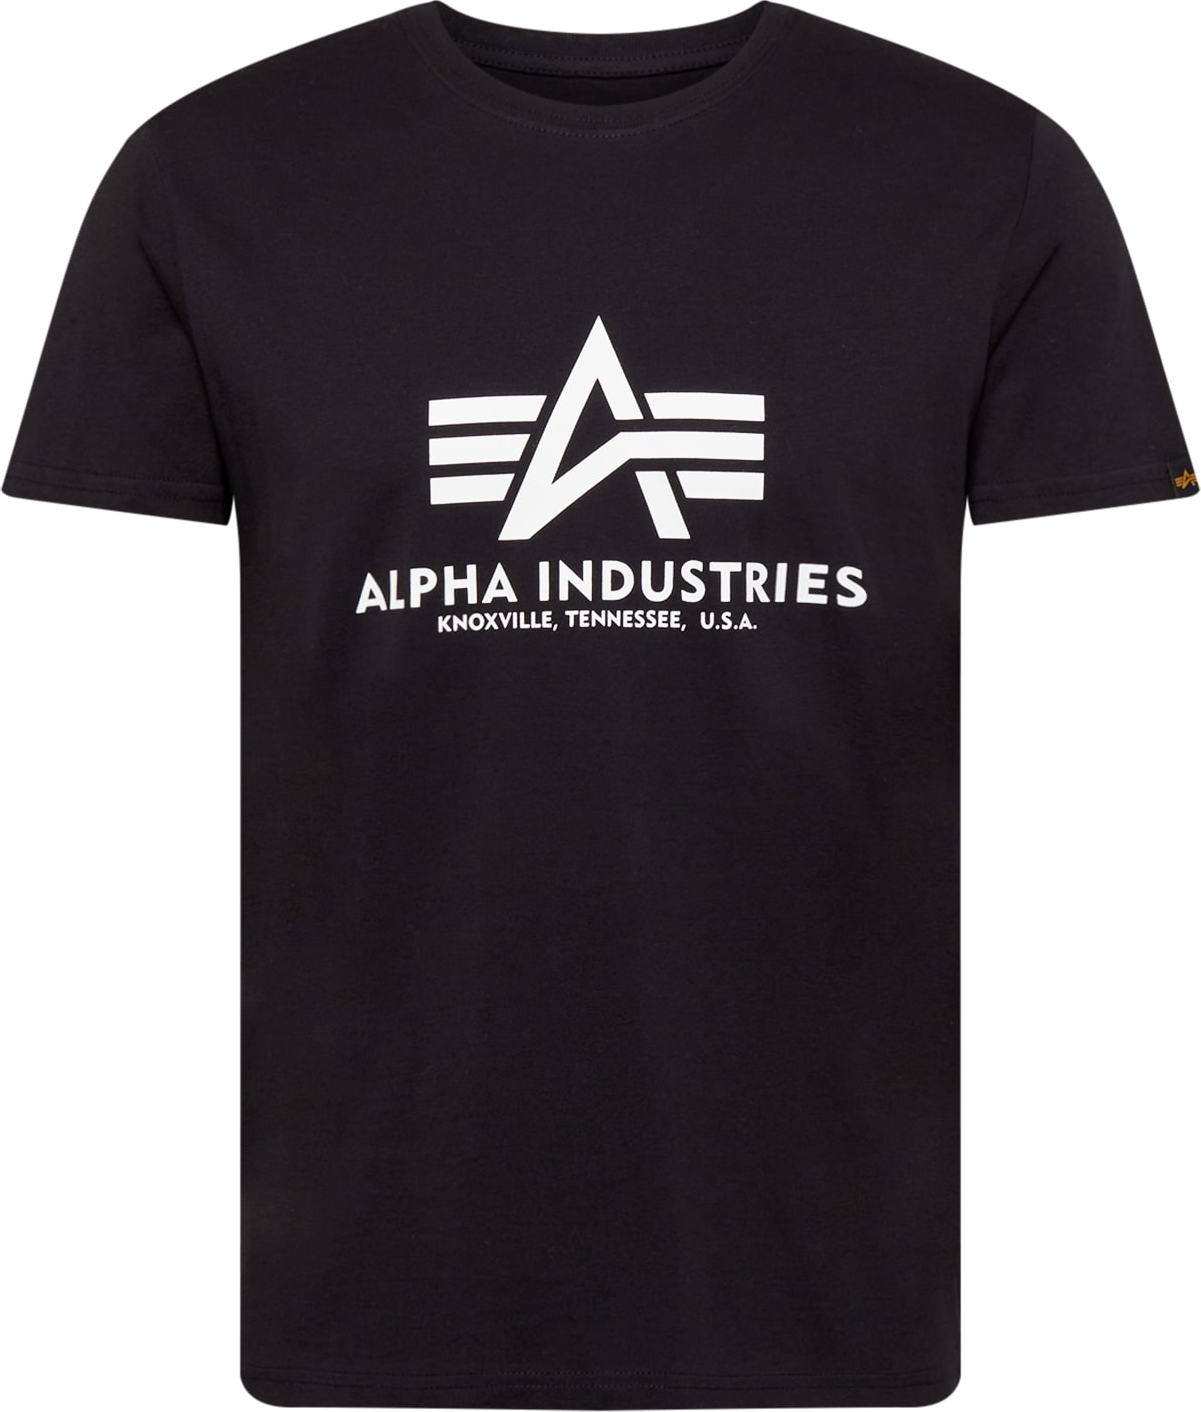 Tričko alpha industries černá / bílá